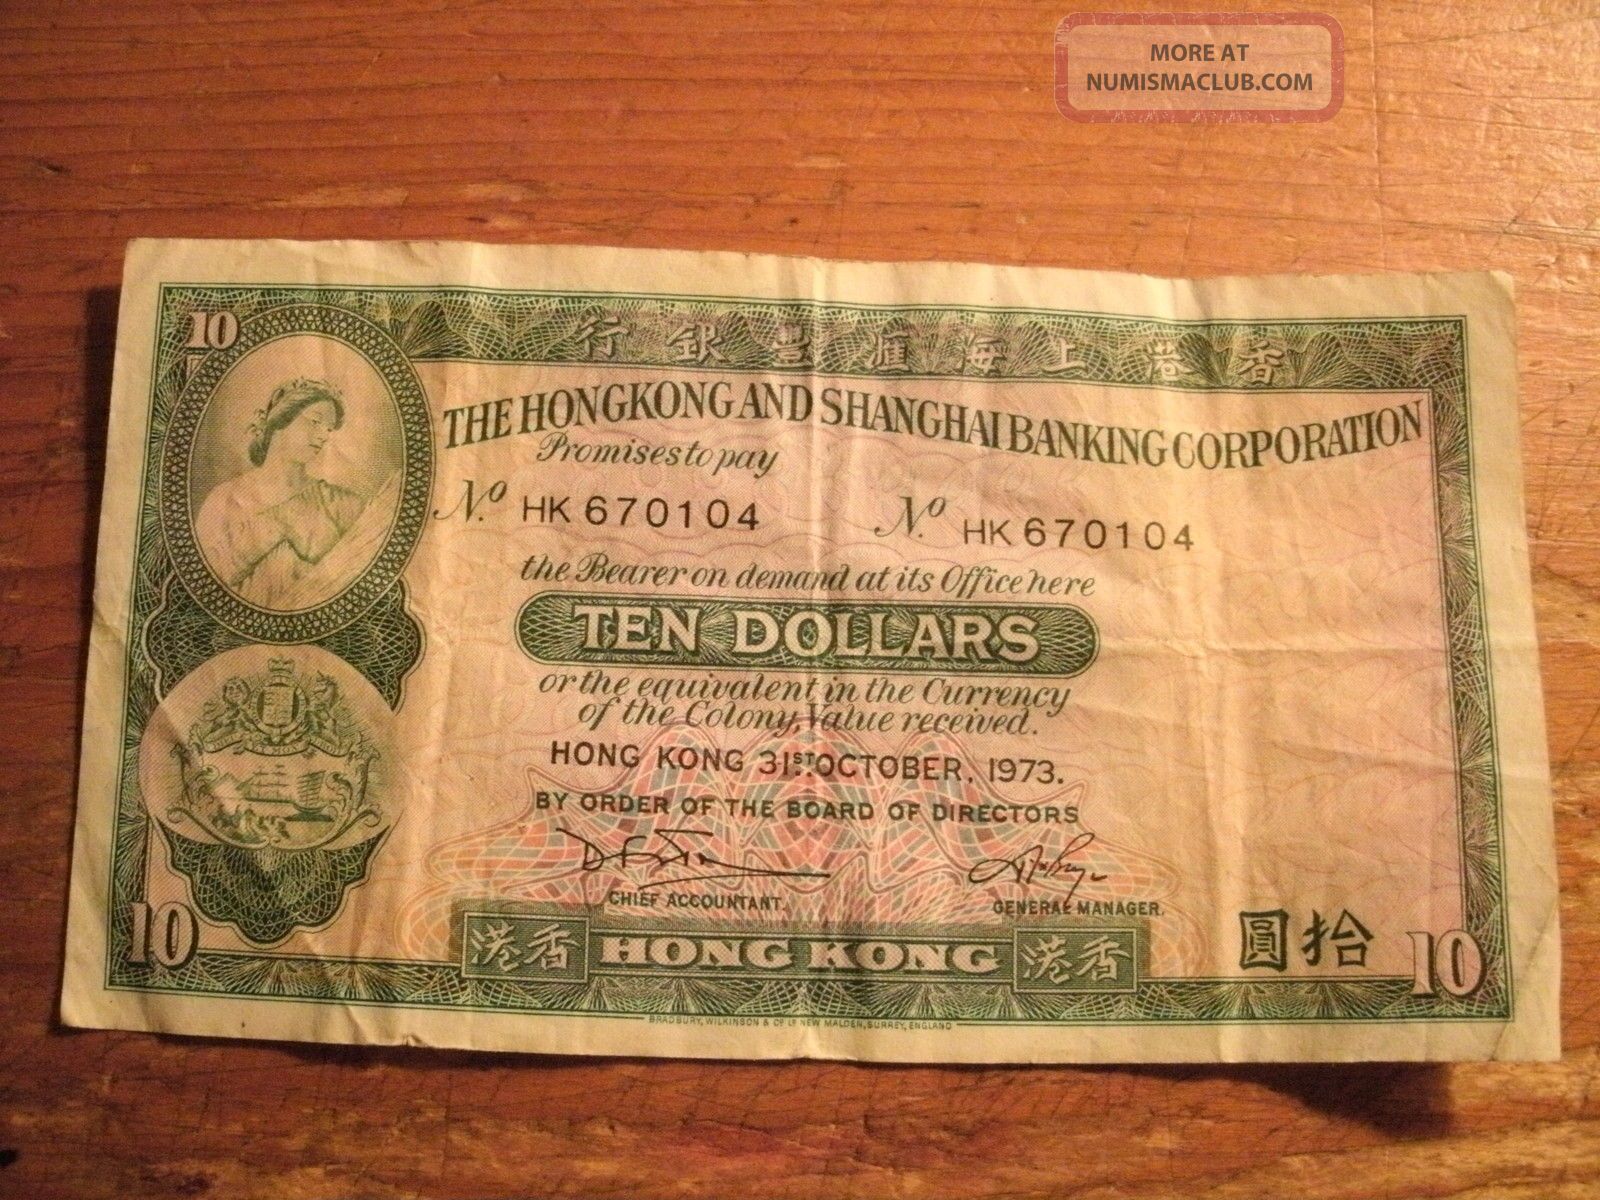 Ten Dollars The Hongkong And Shanghai Banking Corporation Note Asia photo